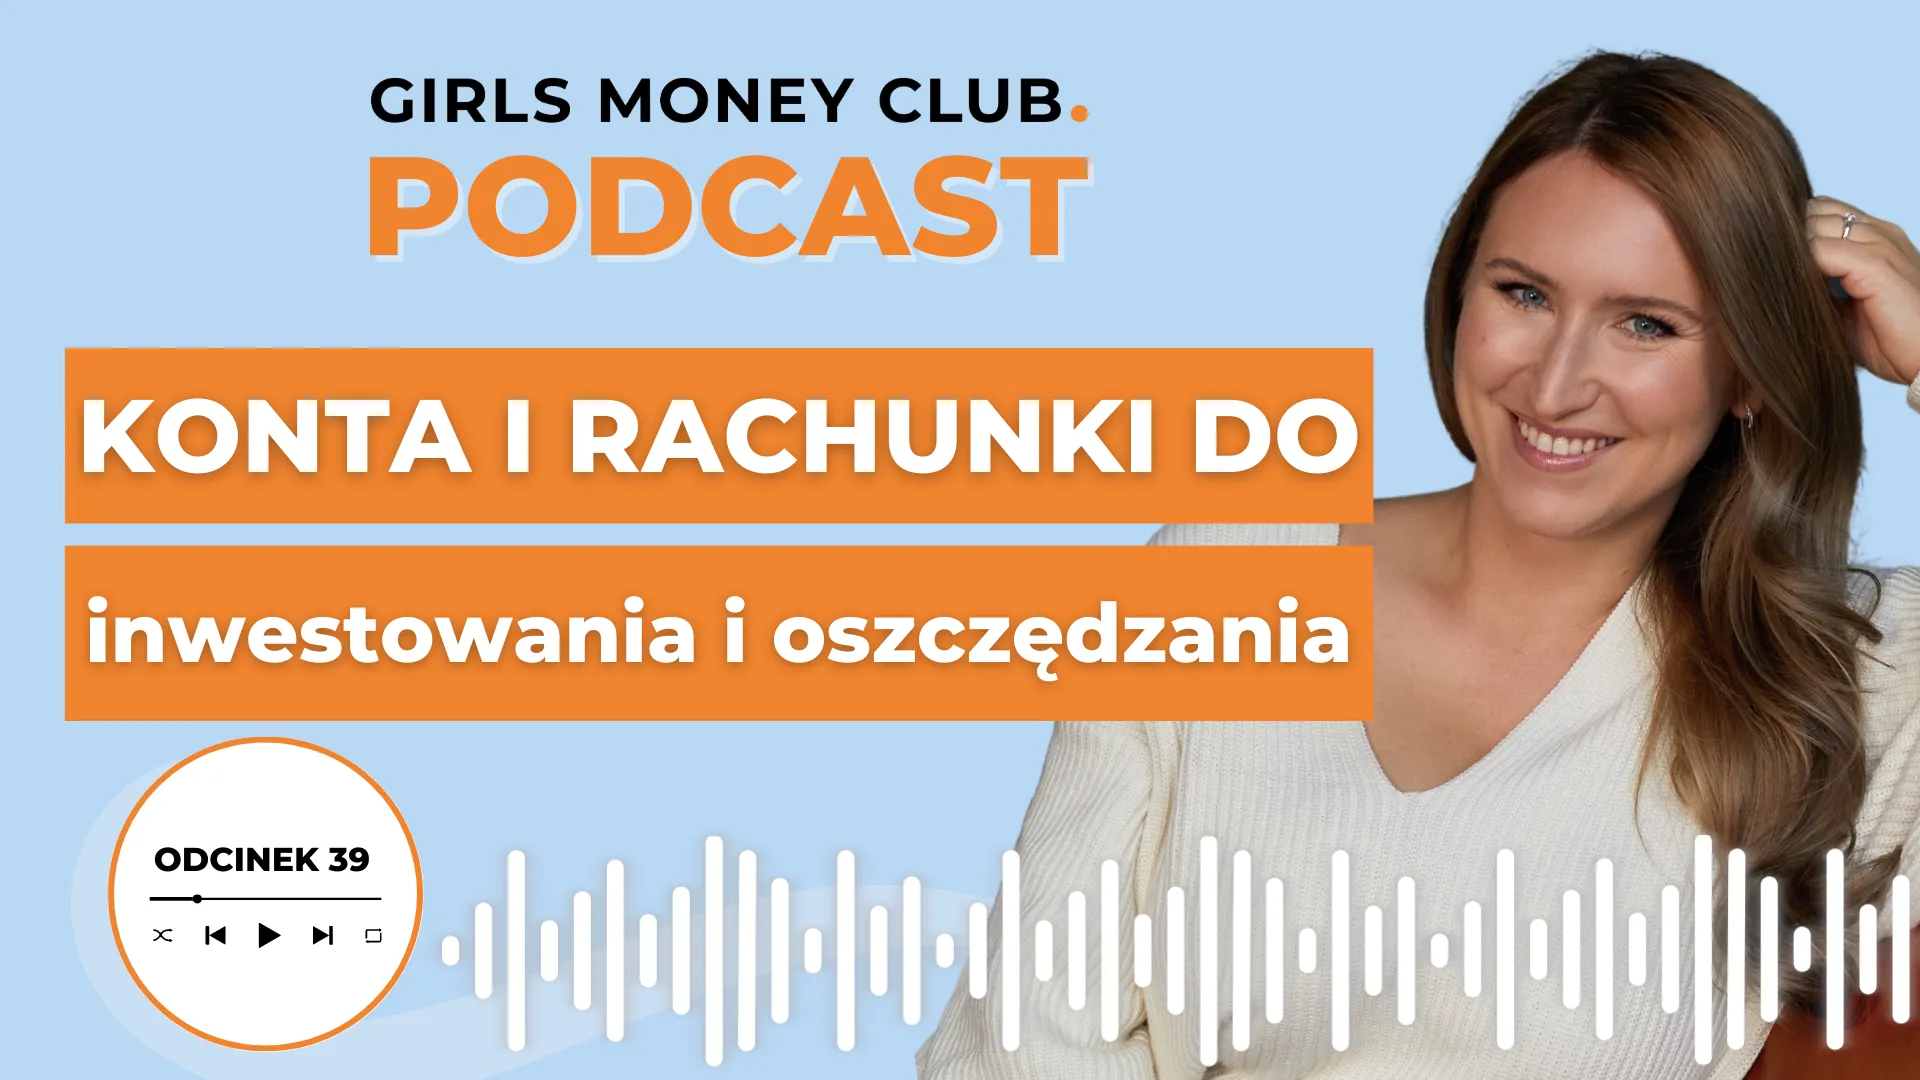 Konta i rachunki | Podcast | Girls Money Club